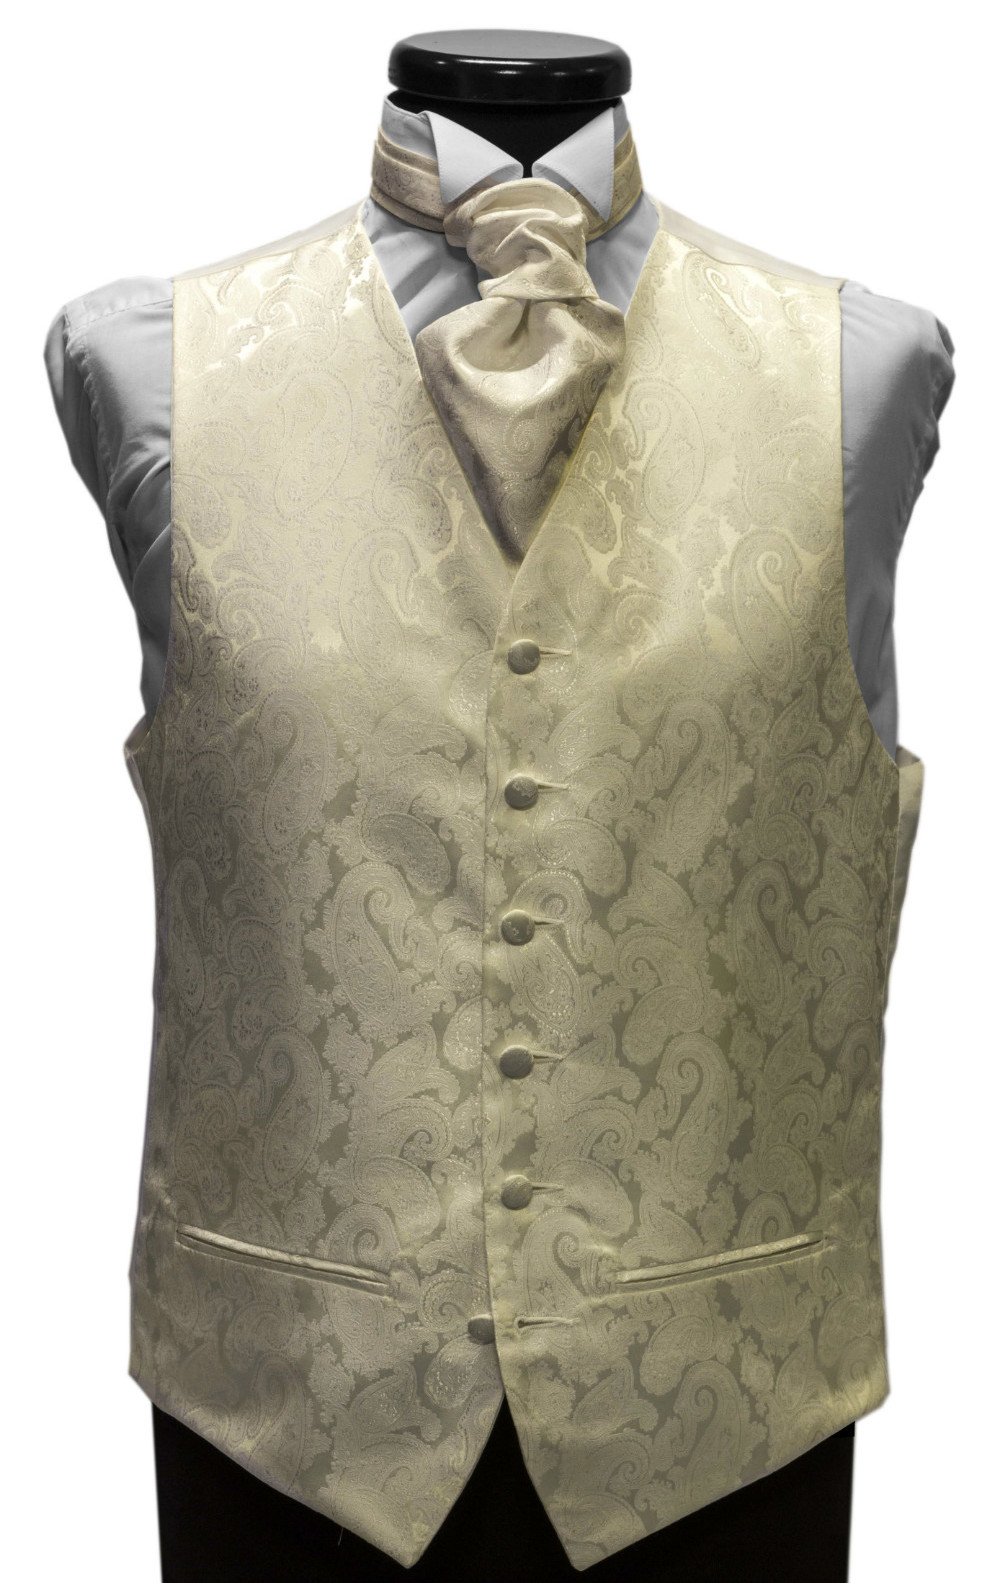 Ivory paisley waistcoat with matching cravat